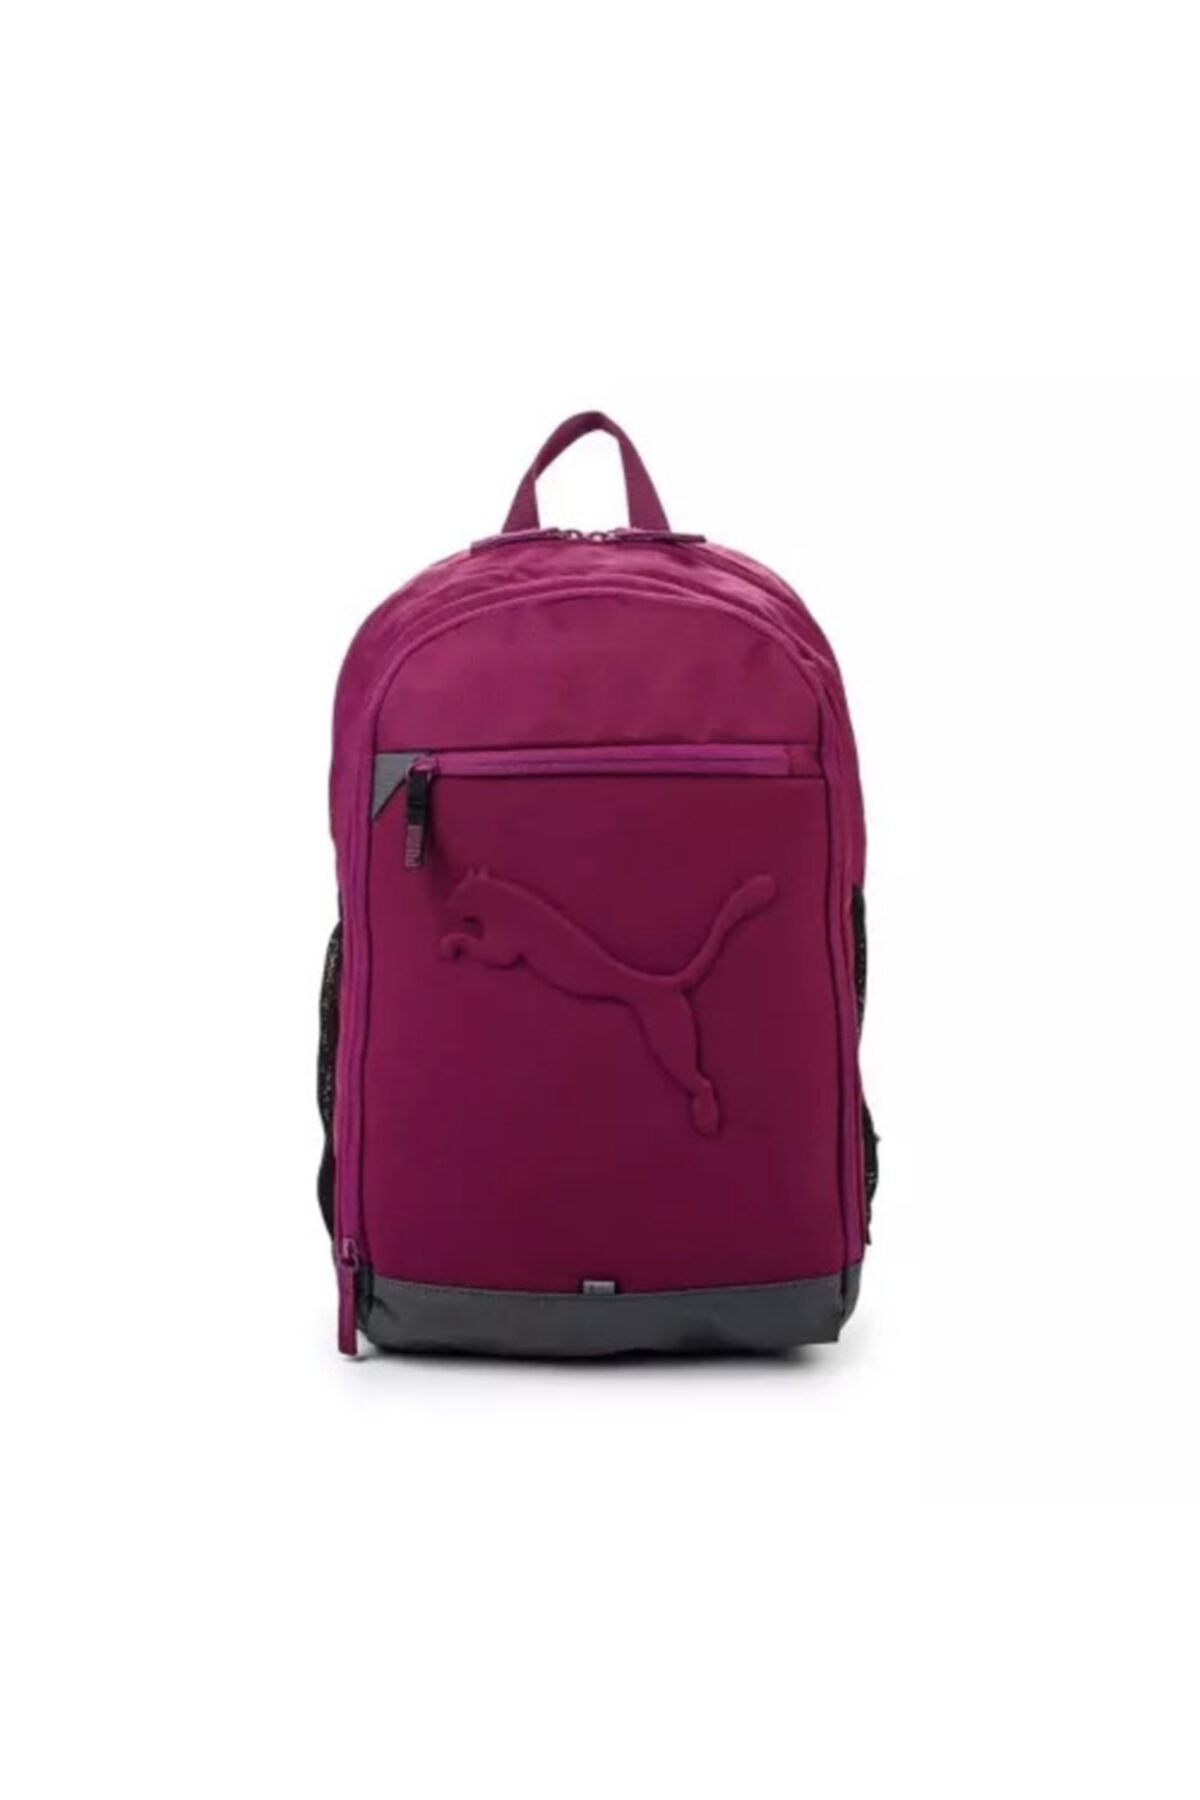 Puma Buzz Backpack 07358112